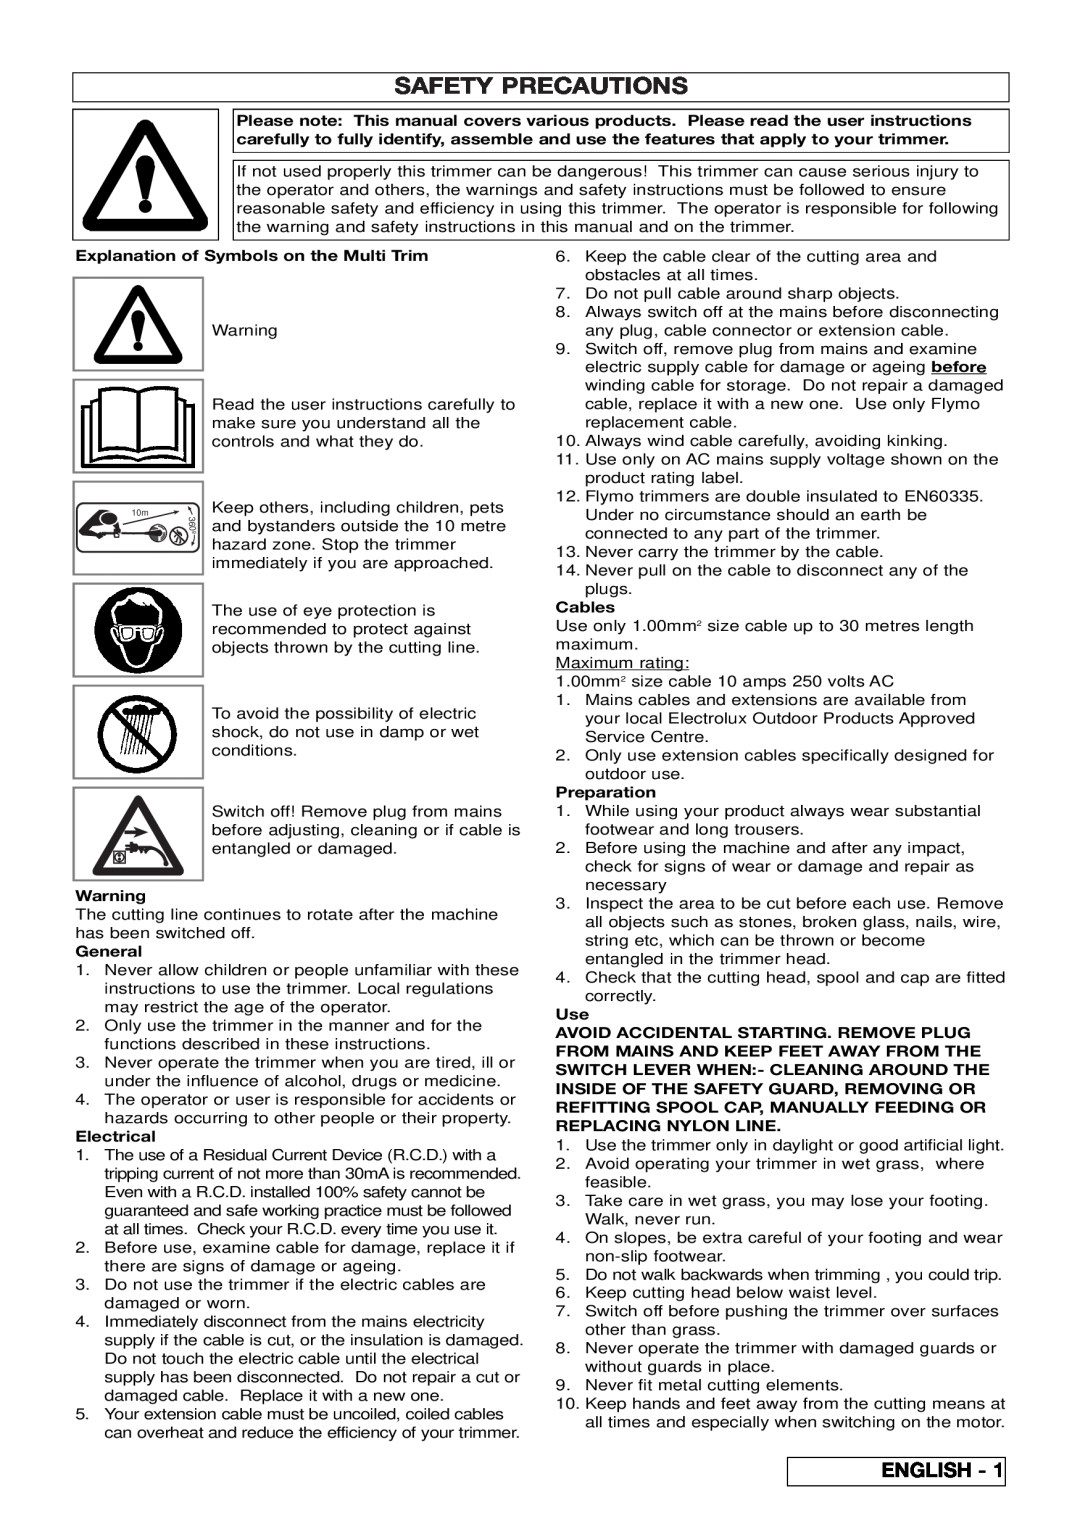 Flymo Multi-Trim manual Safety Precautions, English 